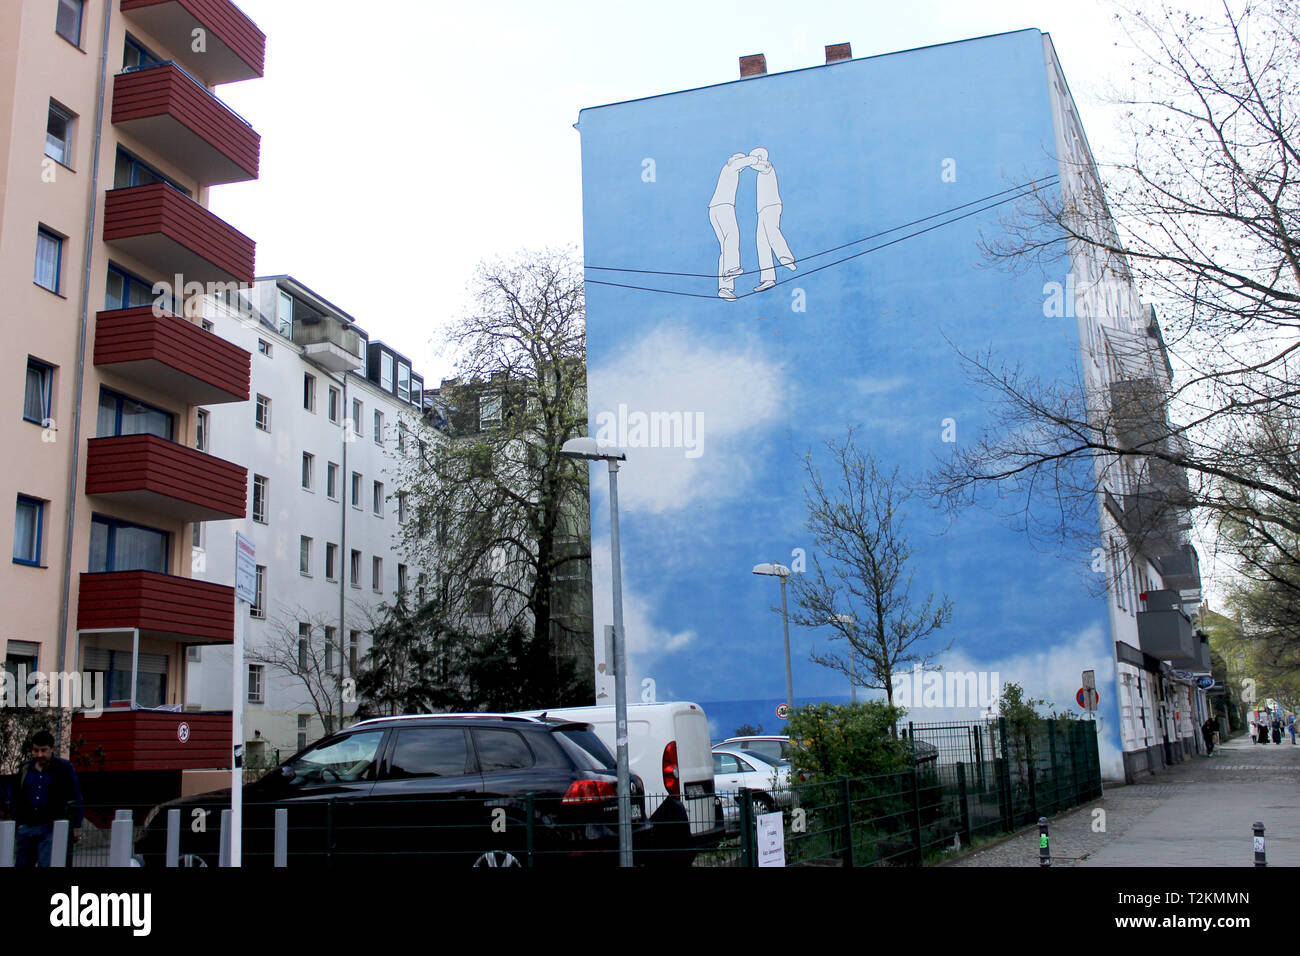 Berlin architecture-building and street art grafitti Stock Photo